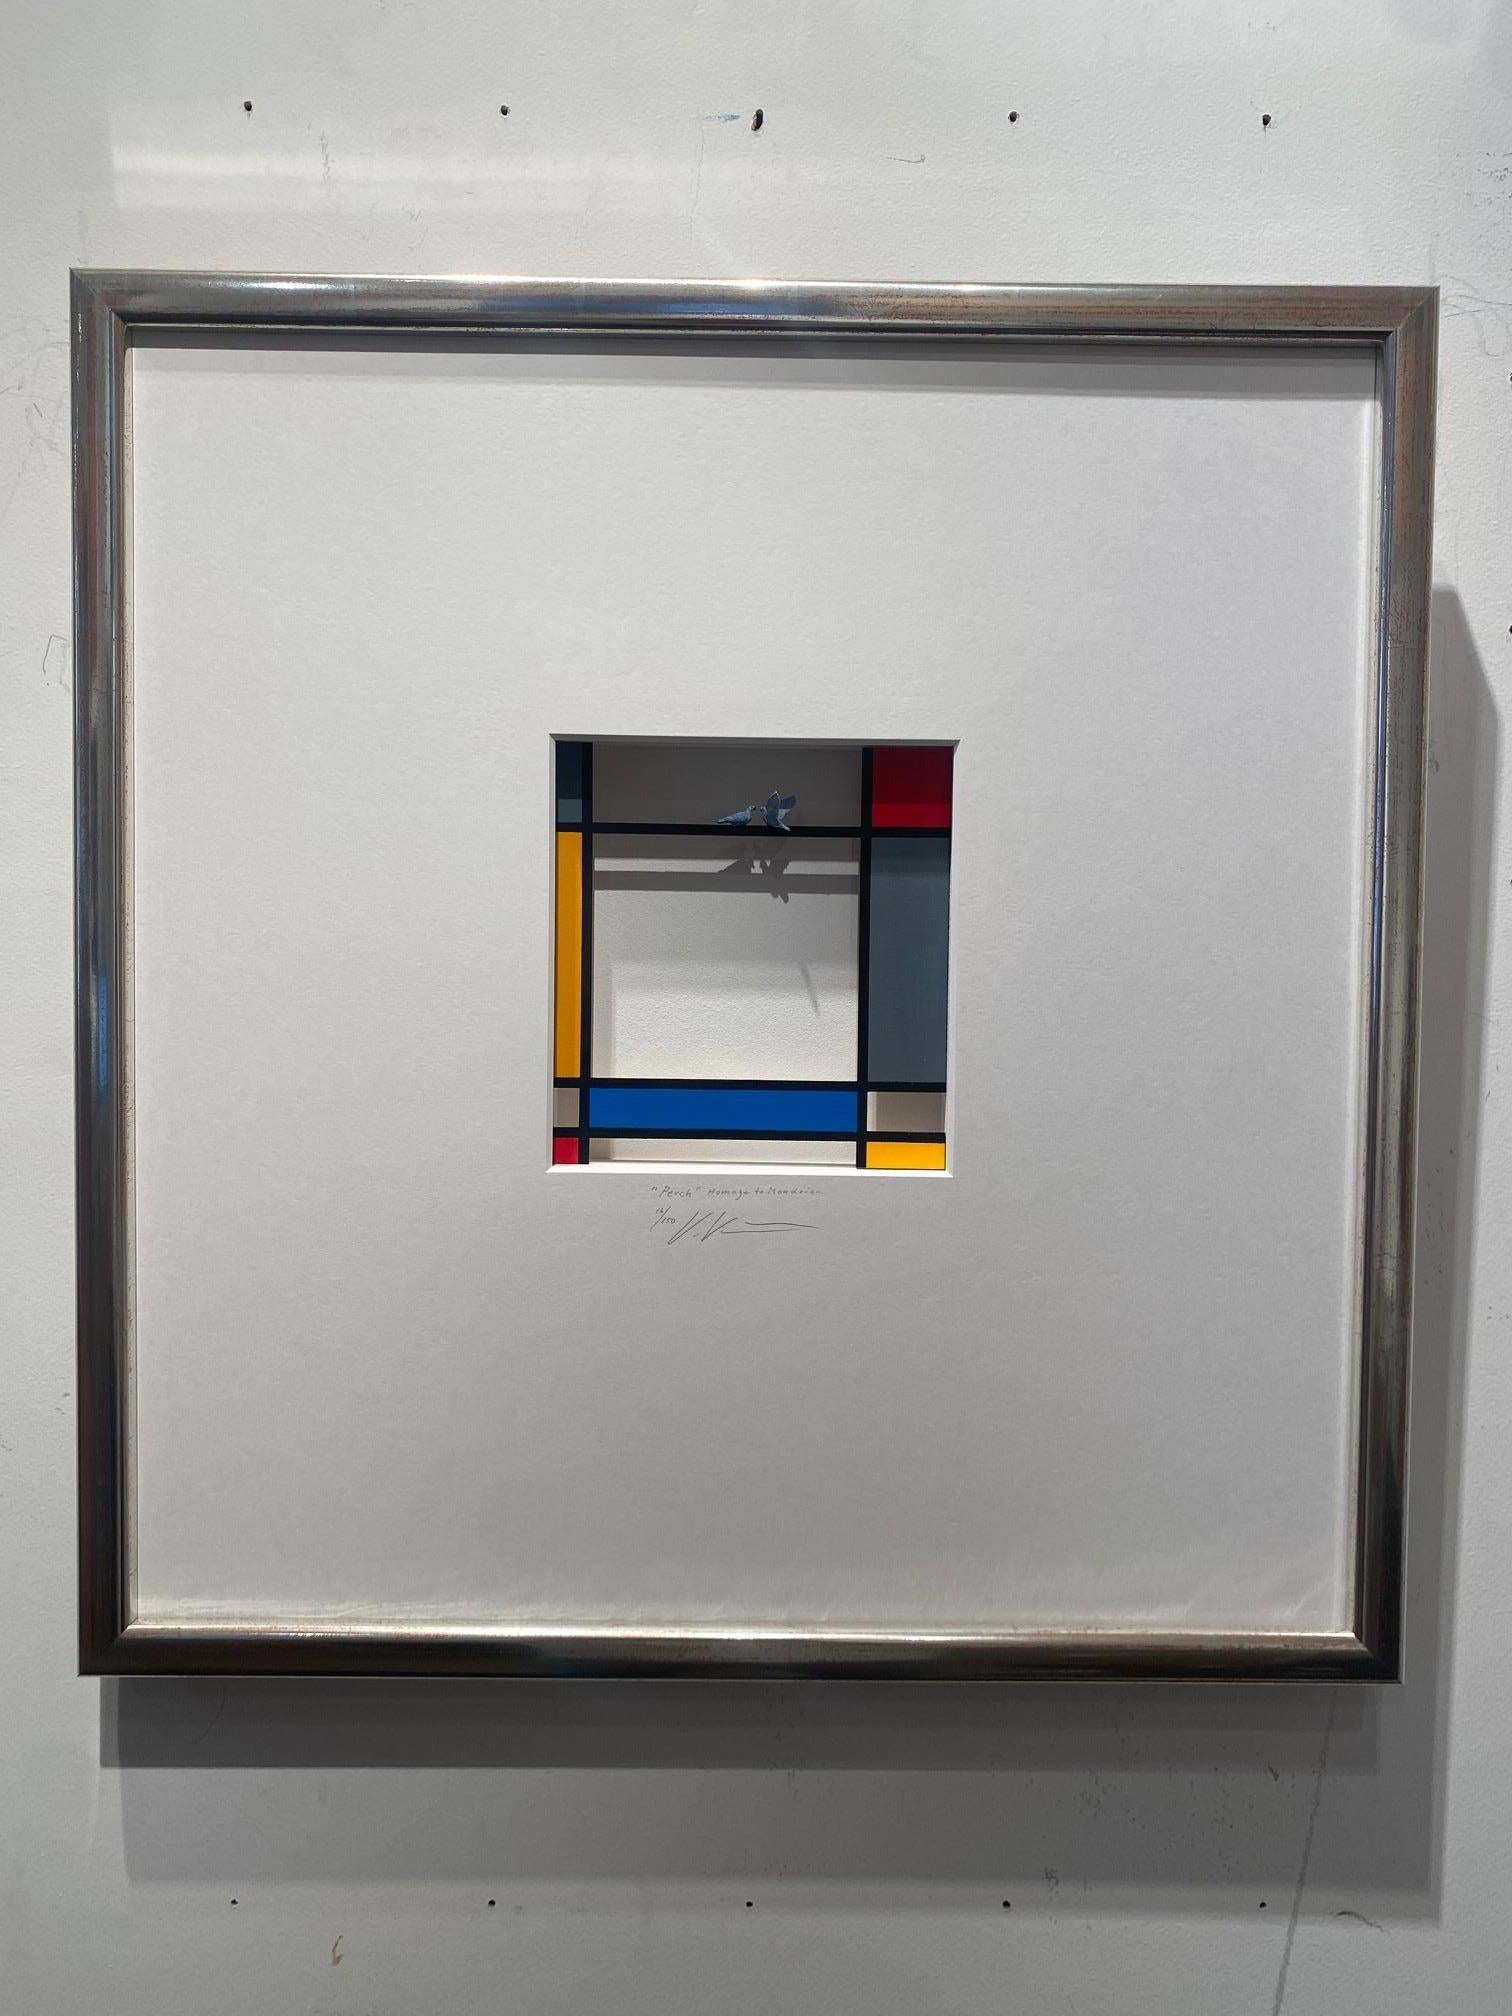 Homage to Mondrian - Perch - contemporary art work, design tribute Dutch master For Sale 3